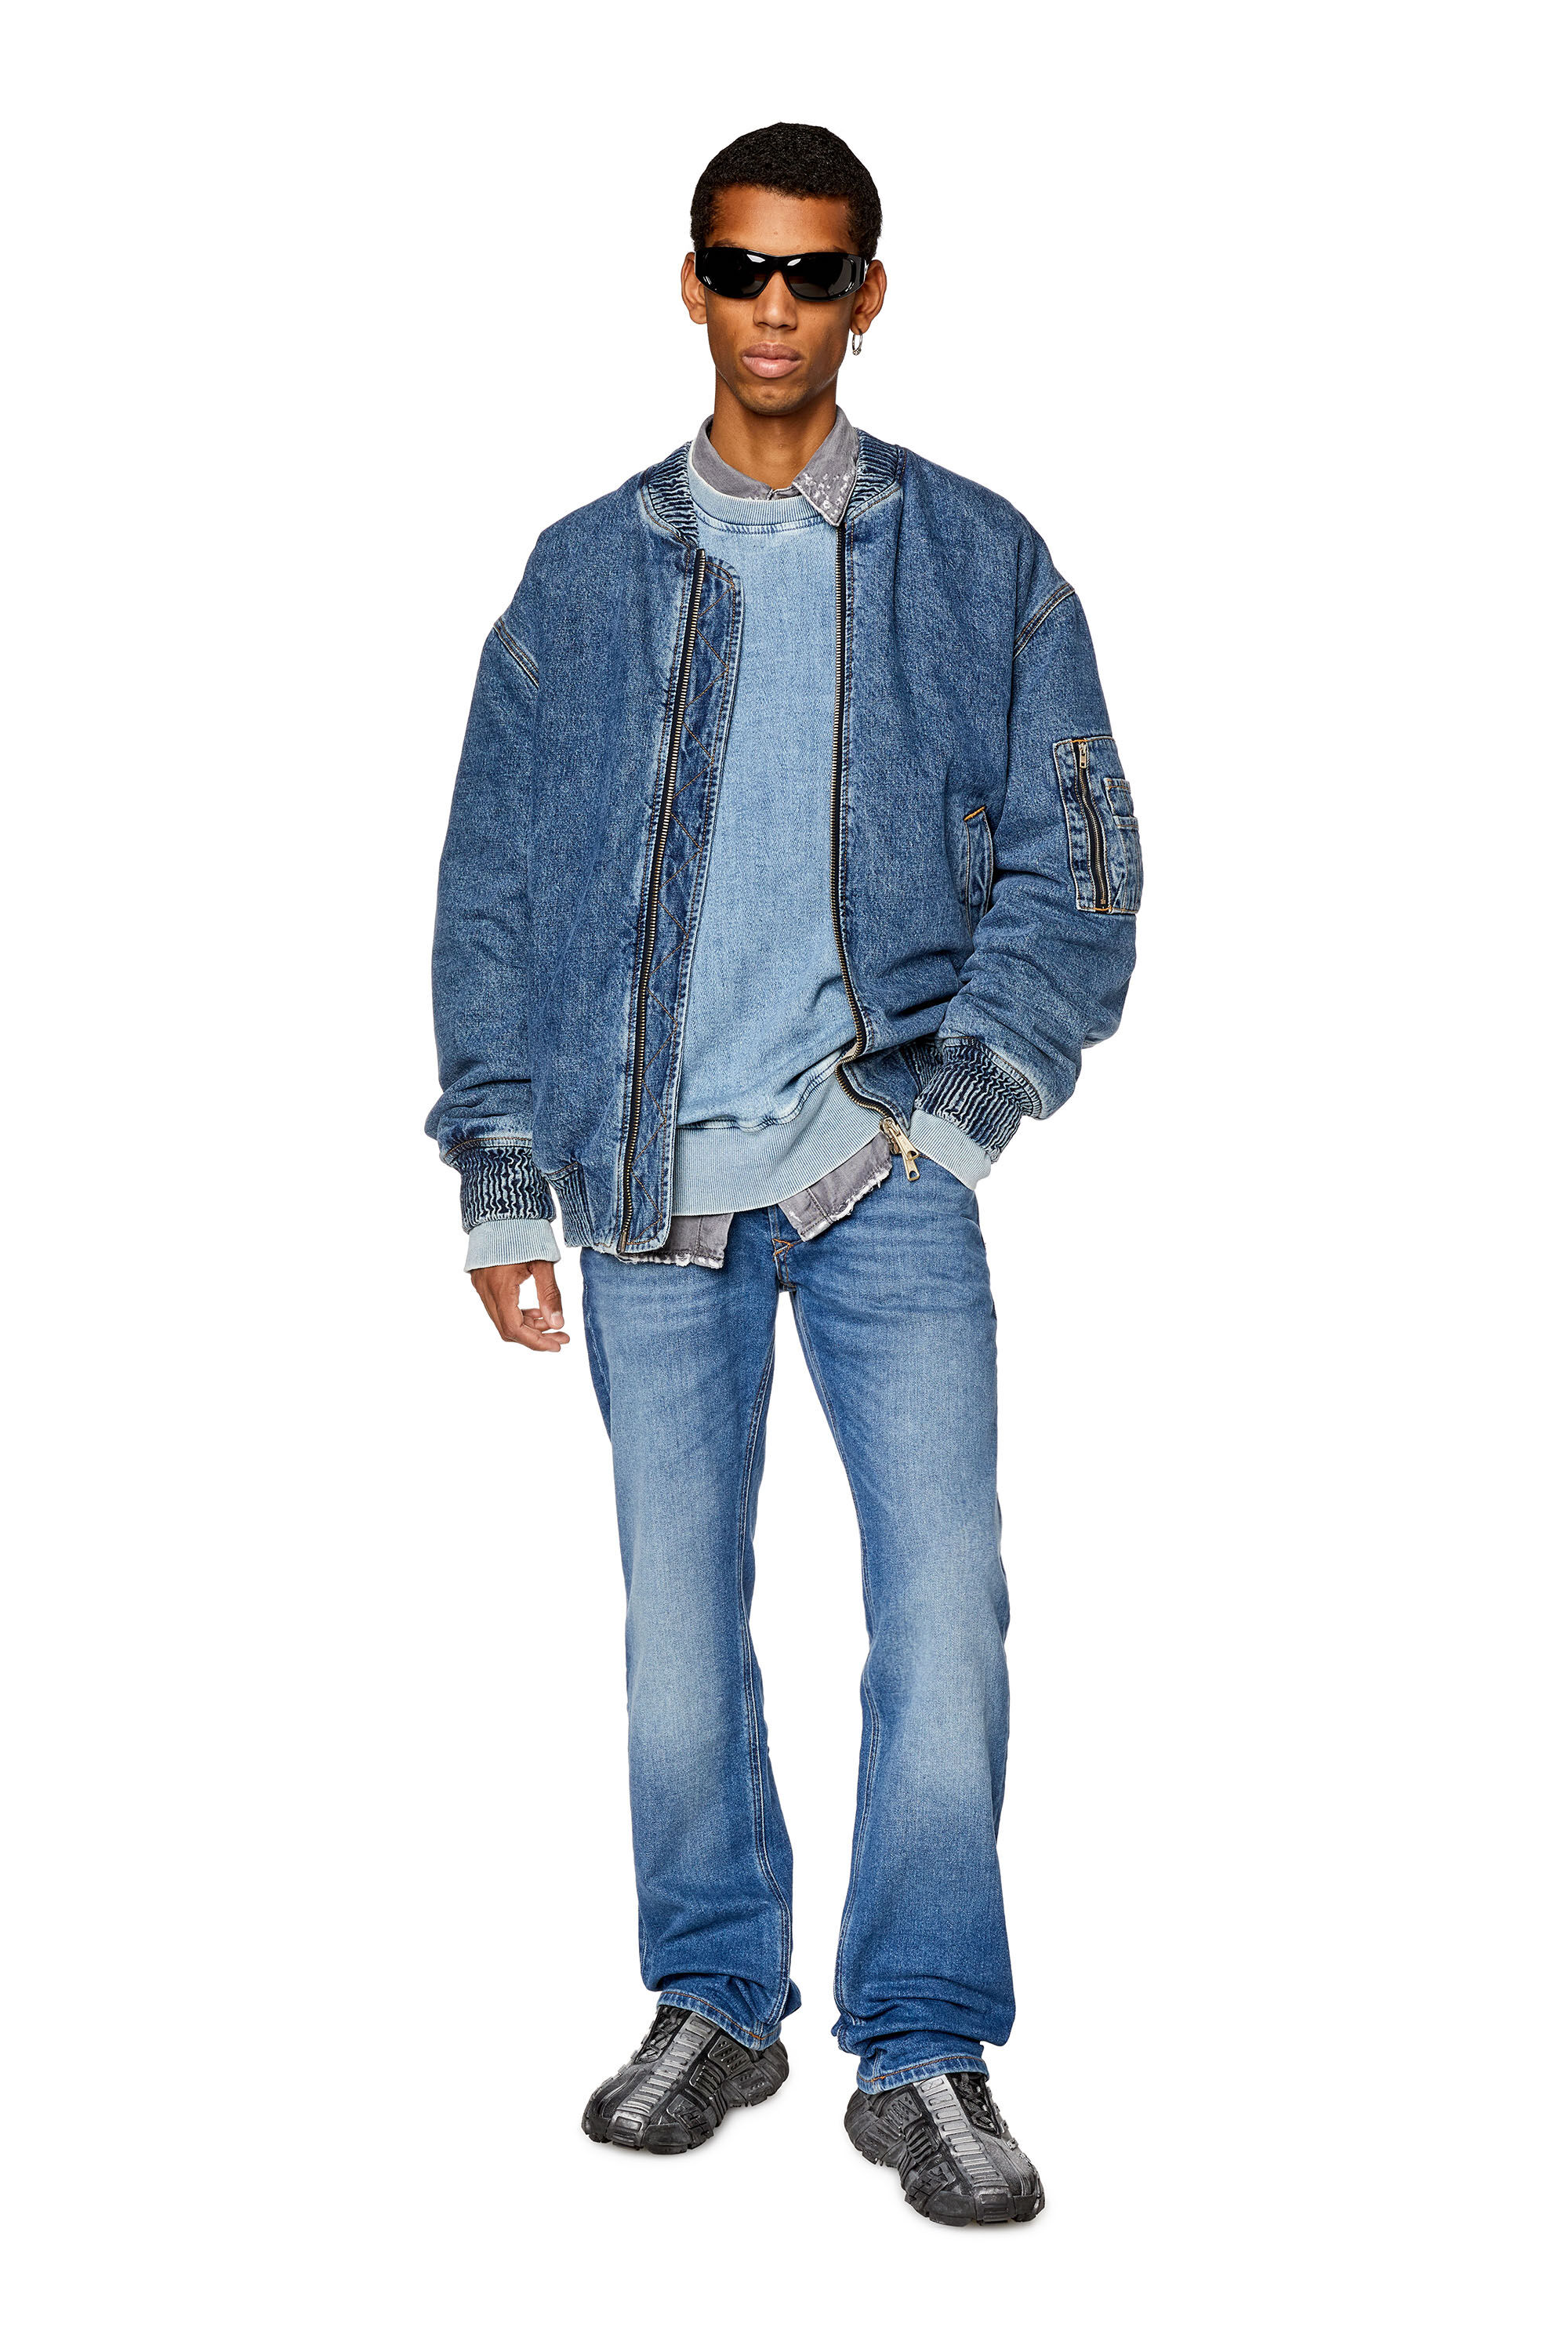 Men's Straight Jeans | Medium blue | Diesel 1985 Larkee